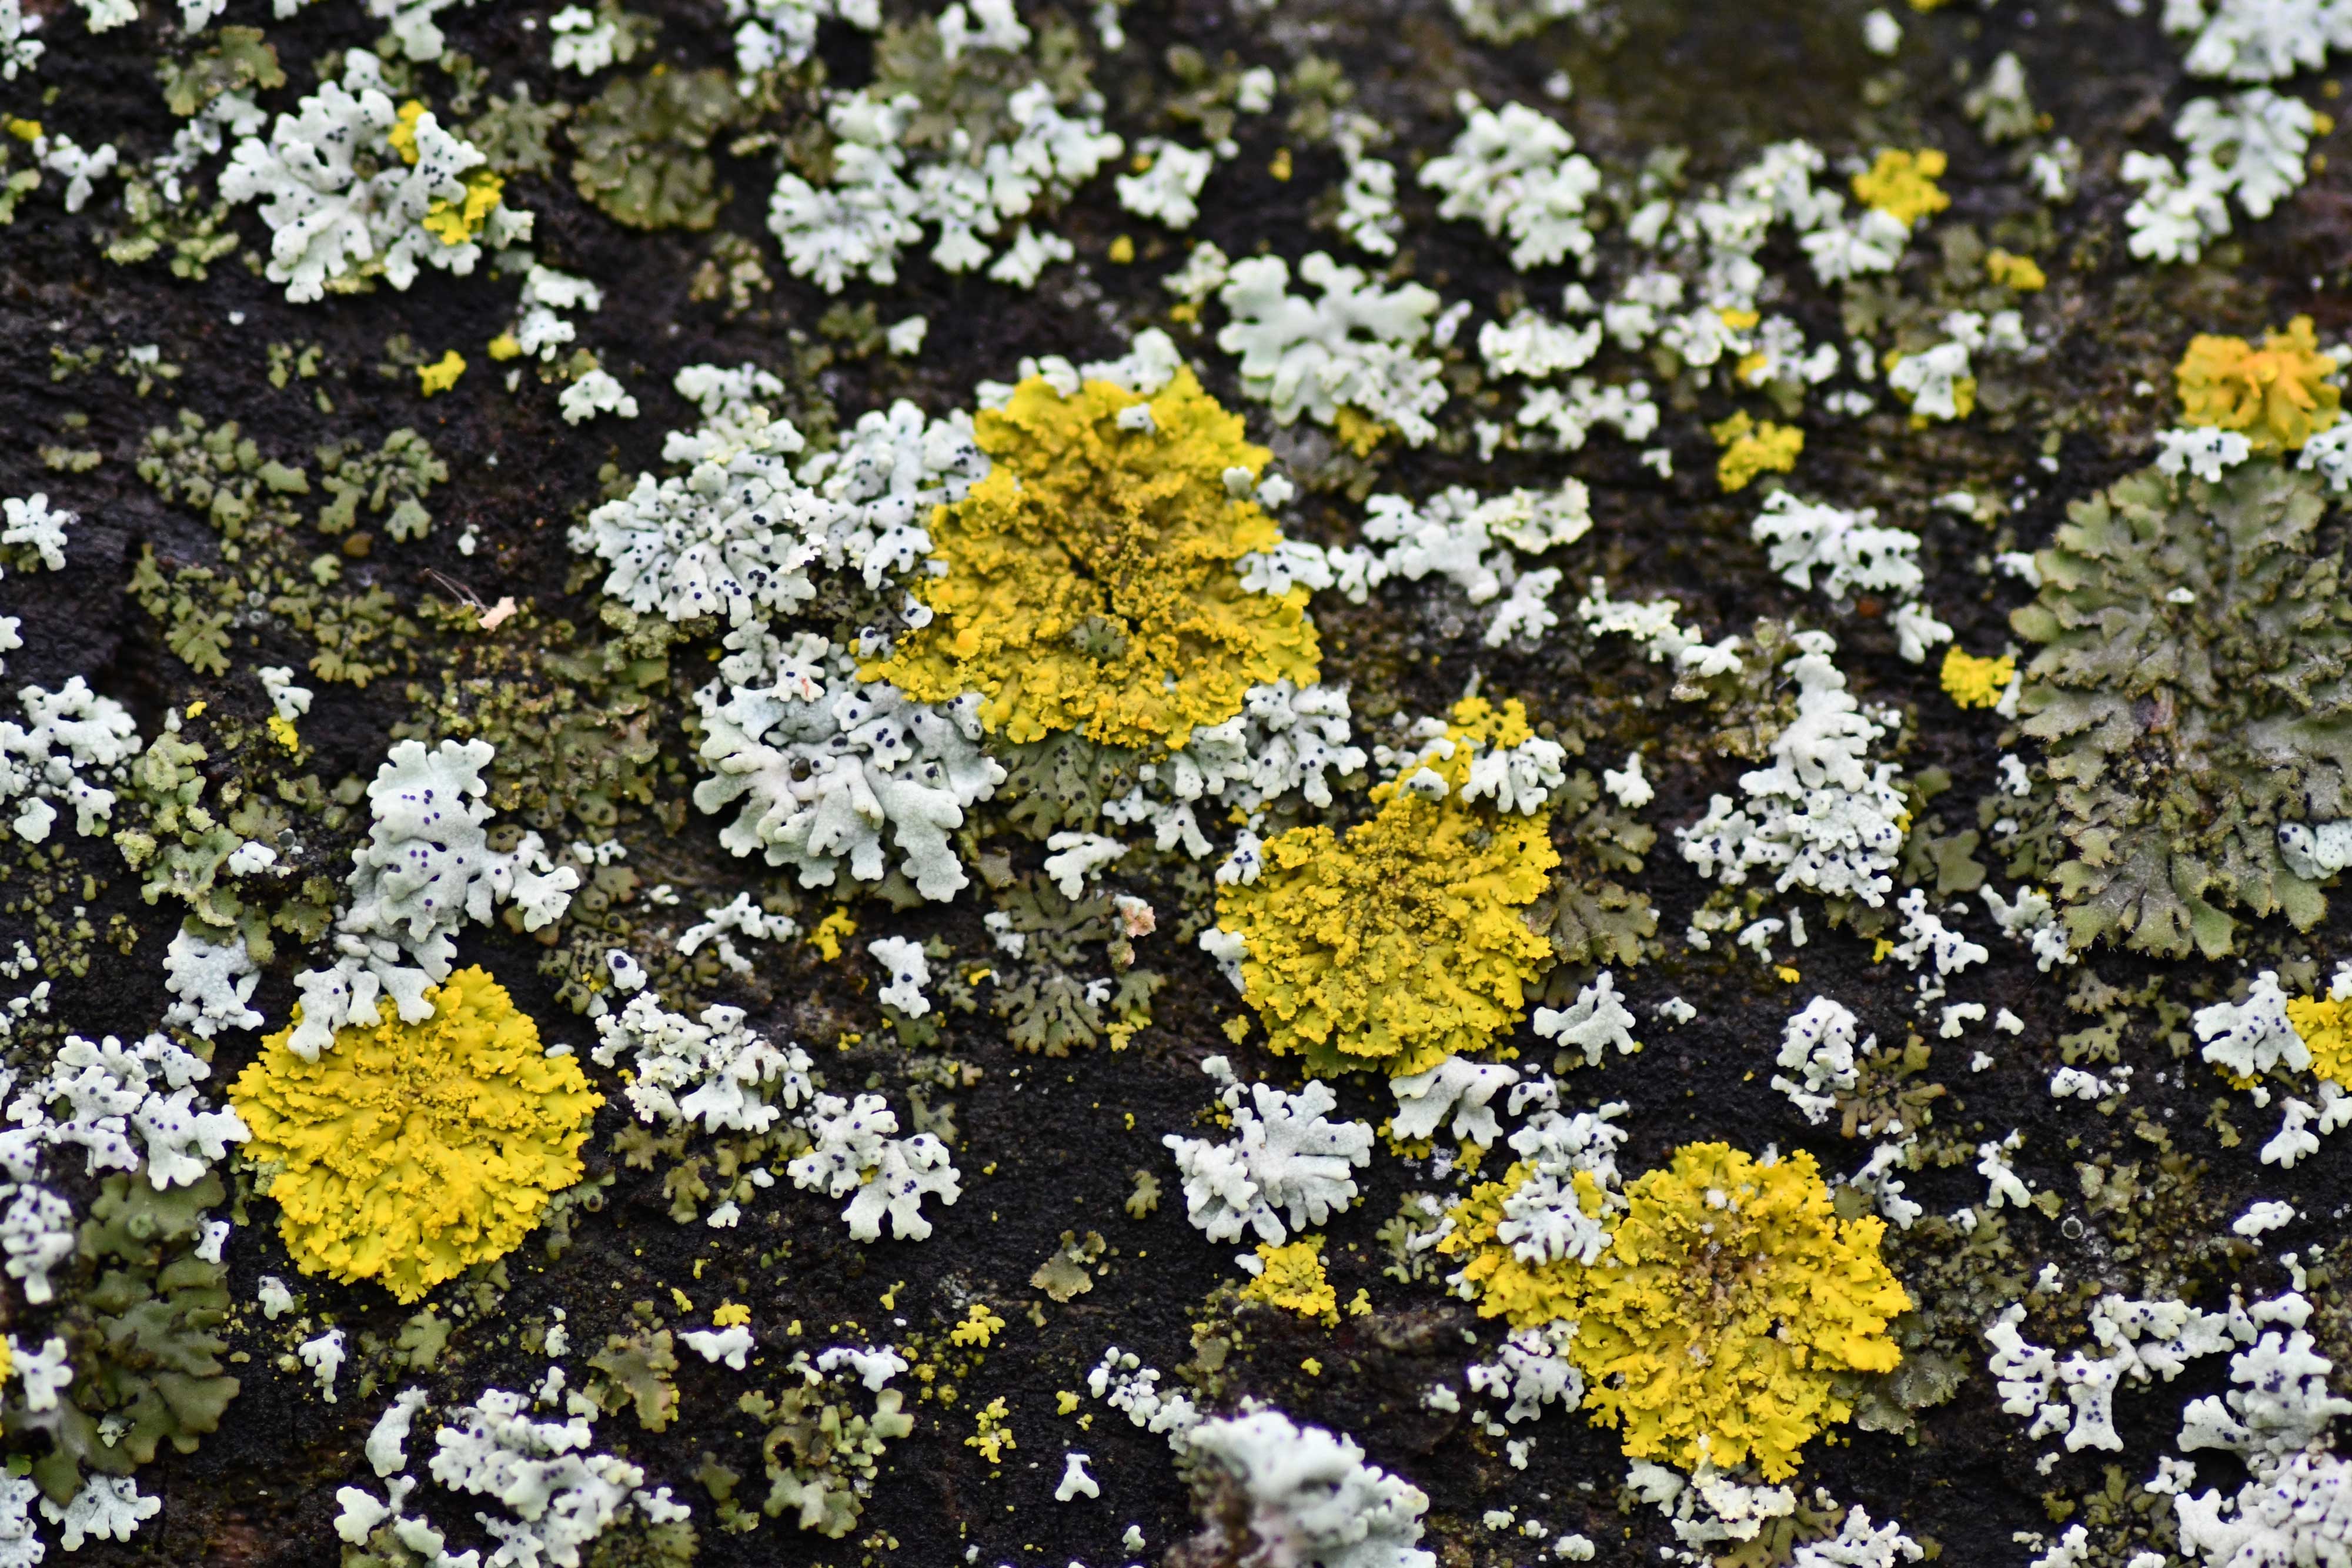 Close-up of lichens on tree bark.